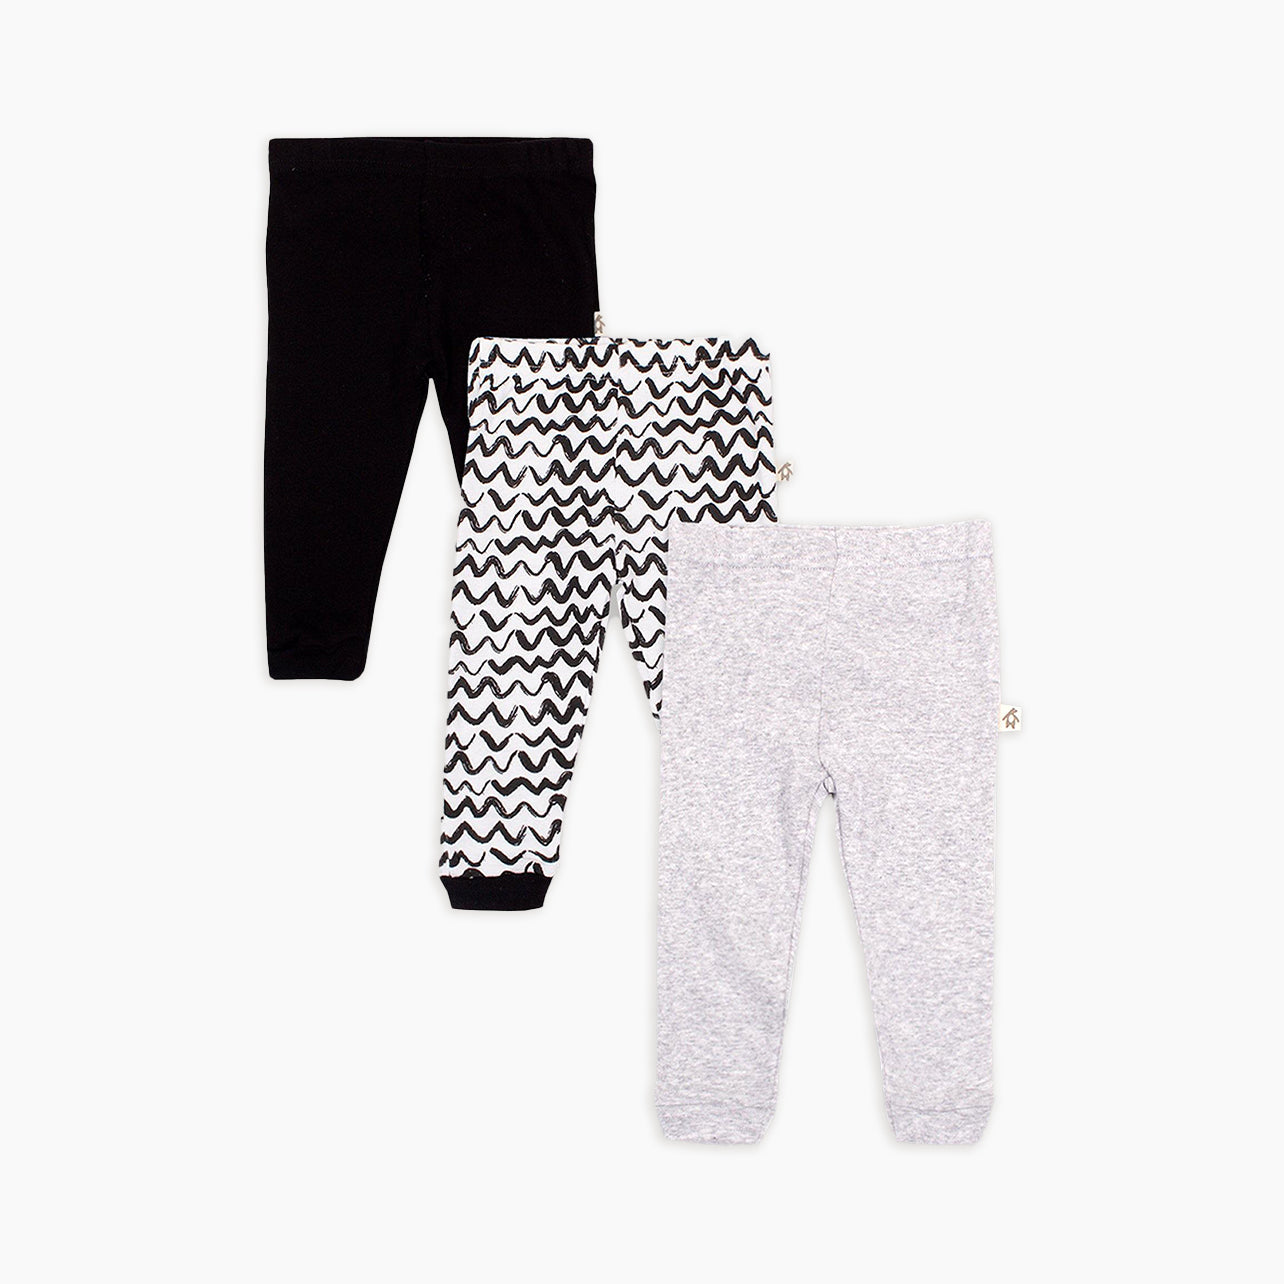 Snugabye Black & White 3 Pack Assorted Pants